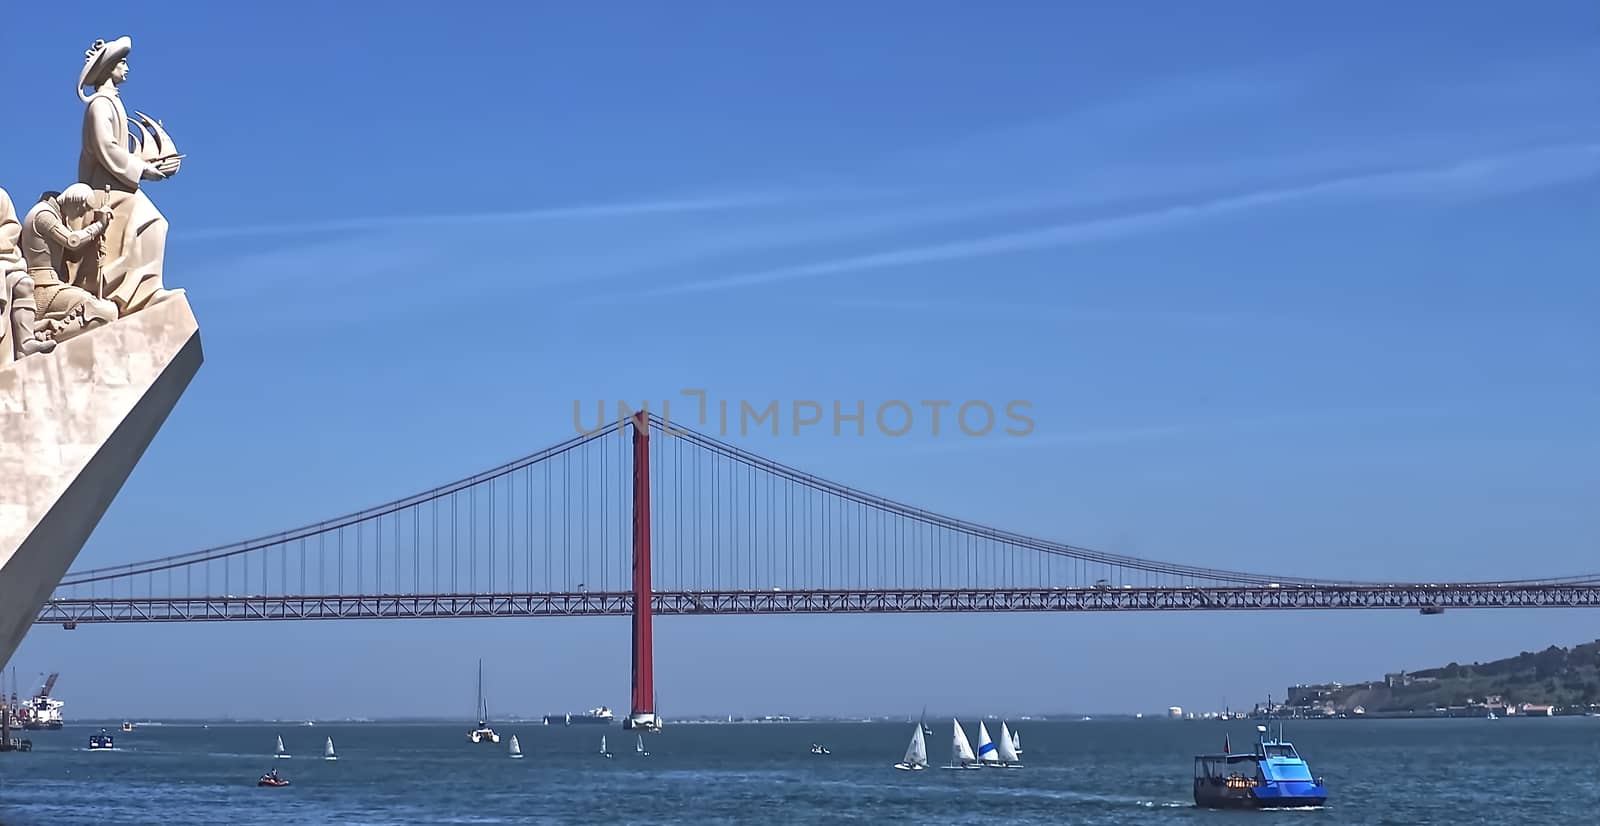 Famous red bride of 25 april in Lisbon named ponte 25 de abril